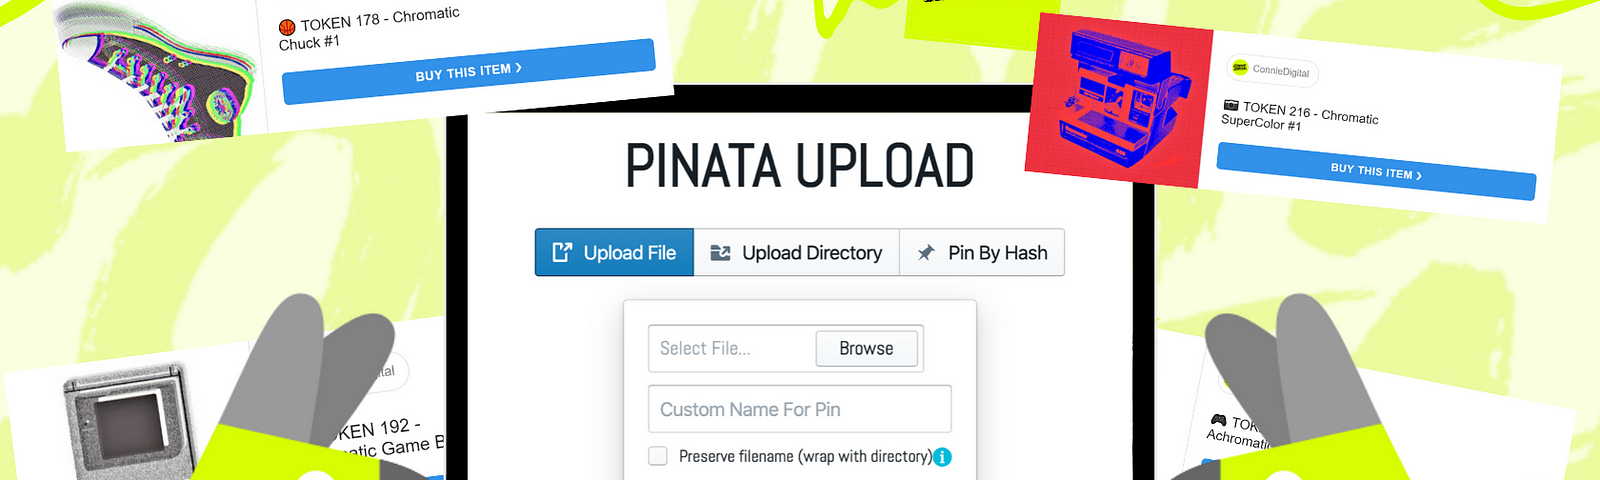 Pinata Blog Graphic 02_Connie Digital IPFS NFT